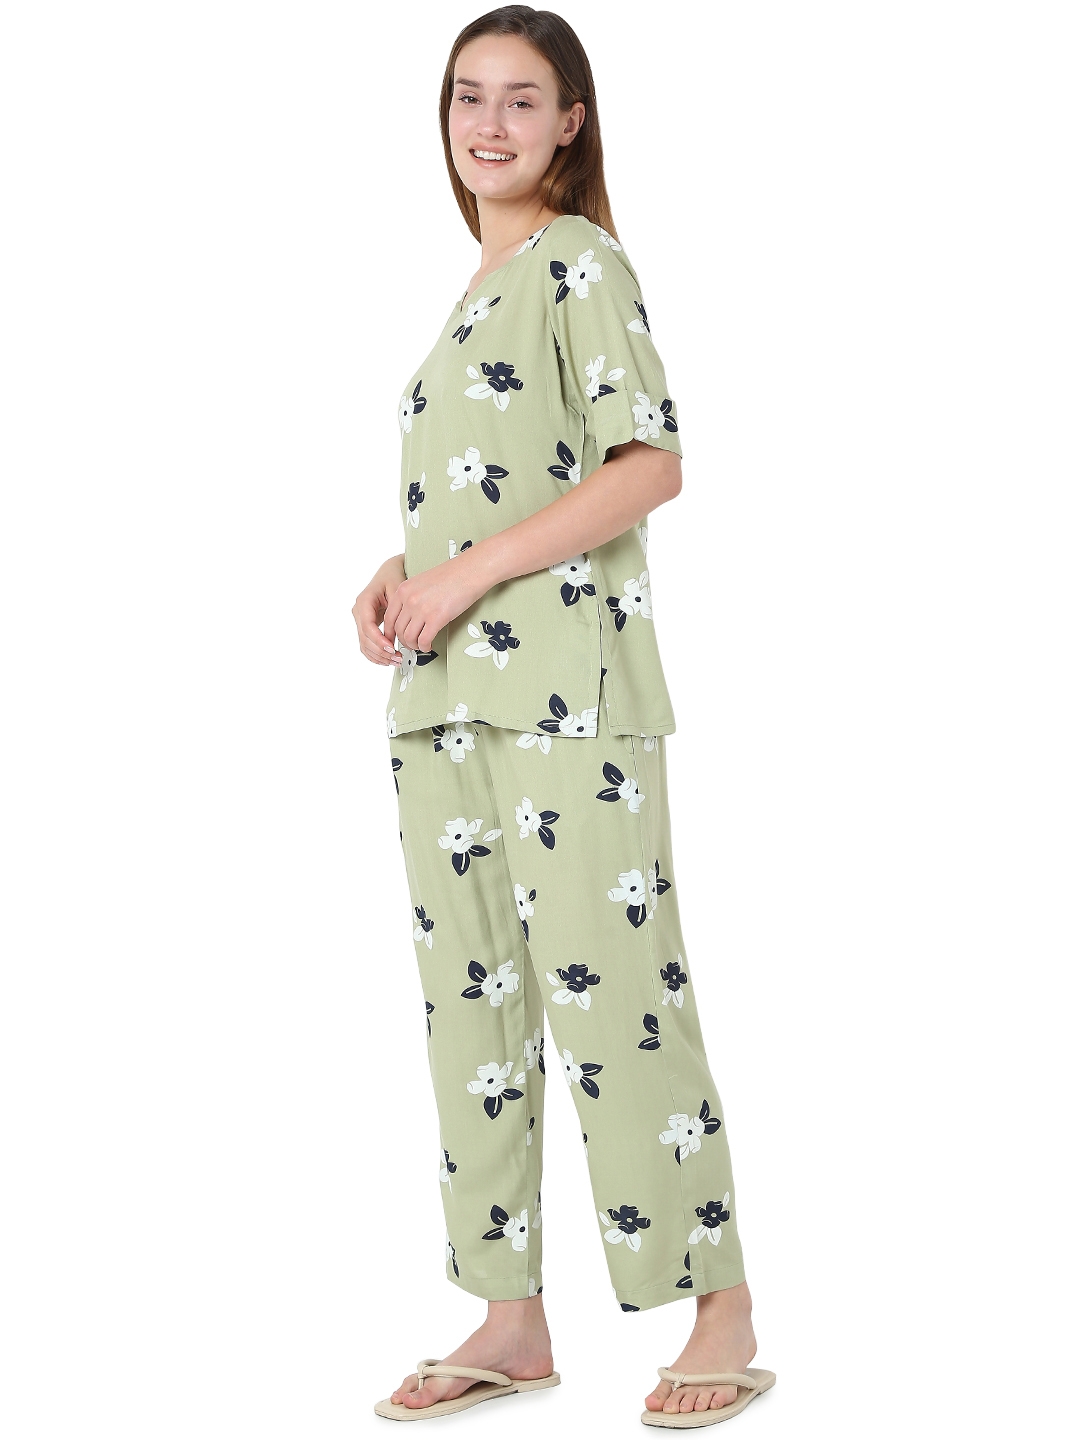 Smarty Pants | Smarty Pants women's cotton olive floral print night suit.  1